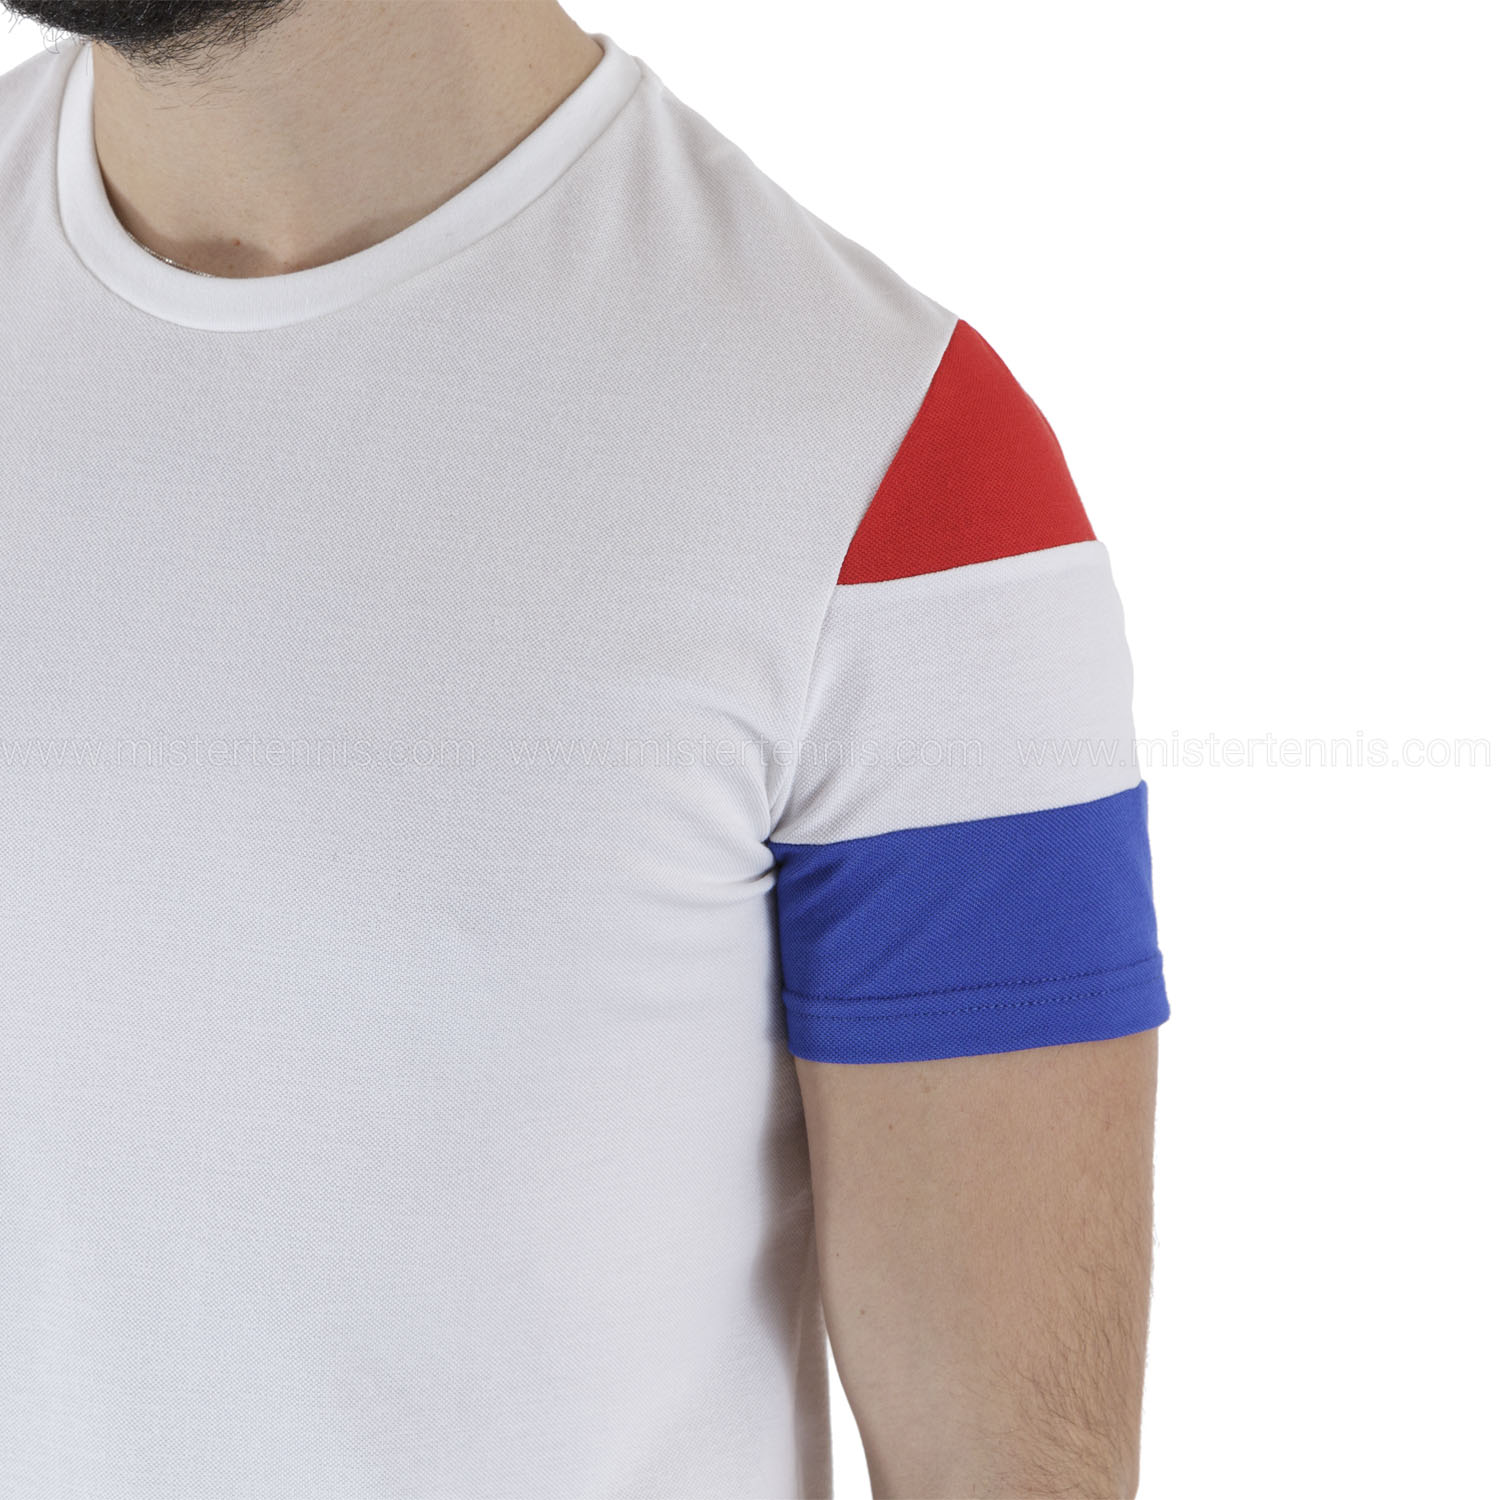 Le Coq Sportif Match Camiseta - New Optical White/Cobalt